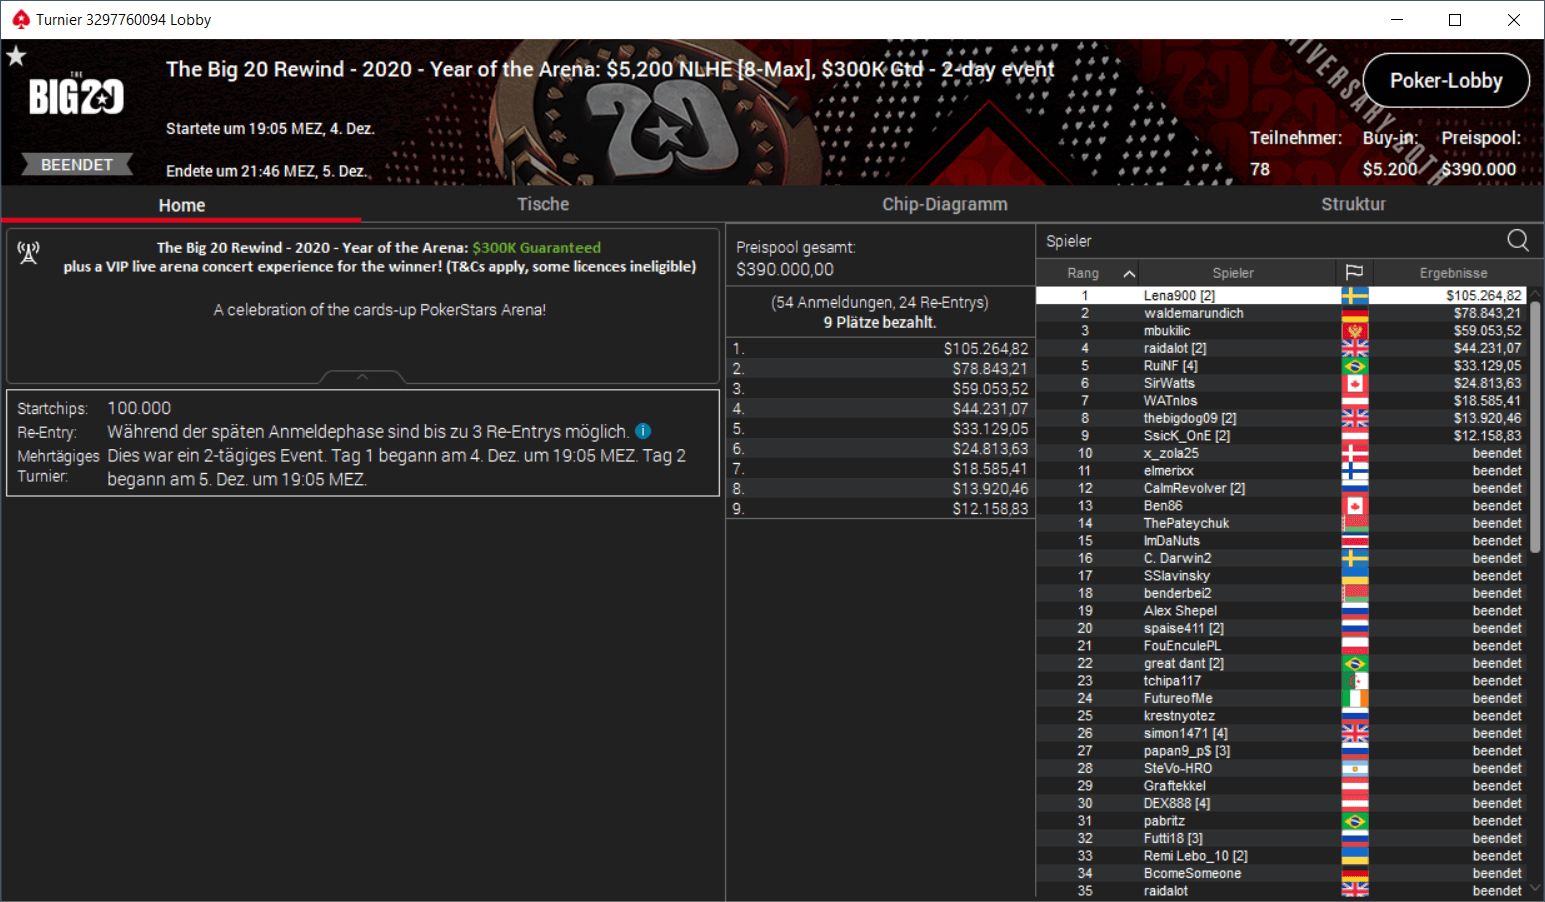 MTT Report - Niklas Astedt wins the Big 20 Rewind on PokerStars for $105,265